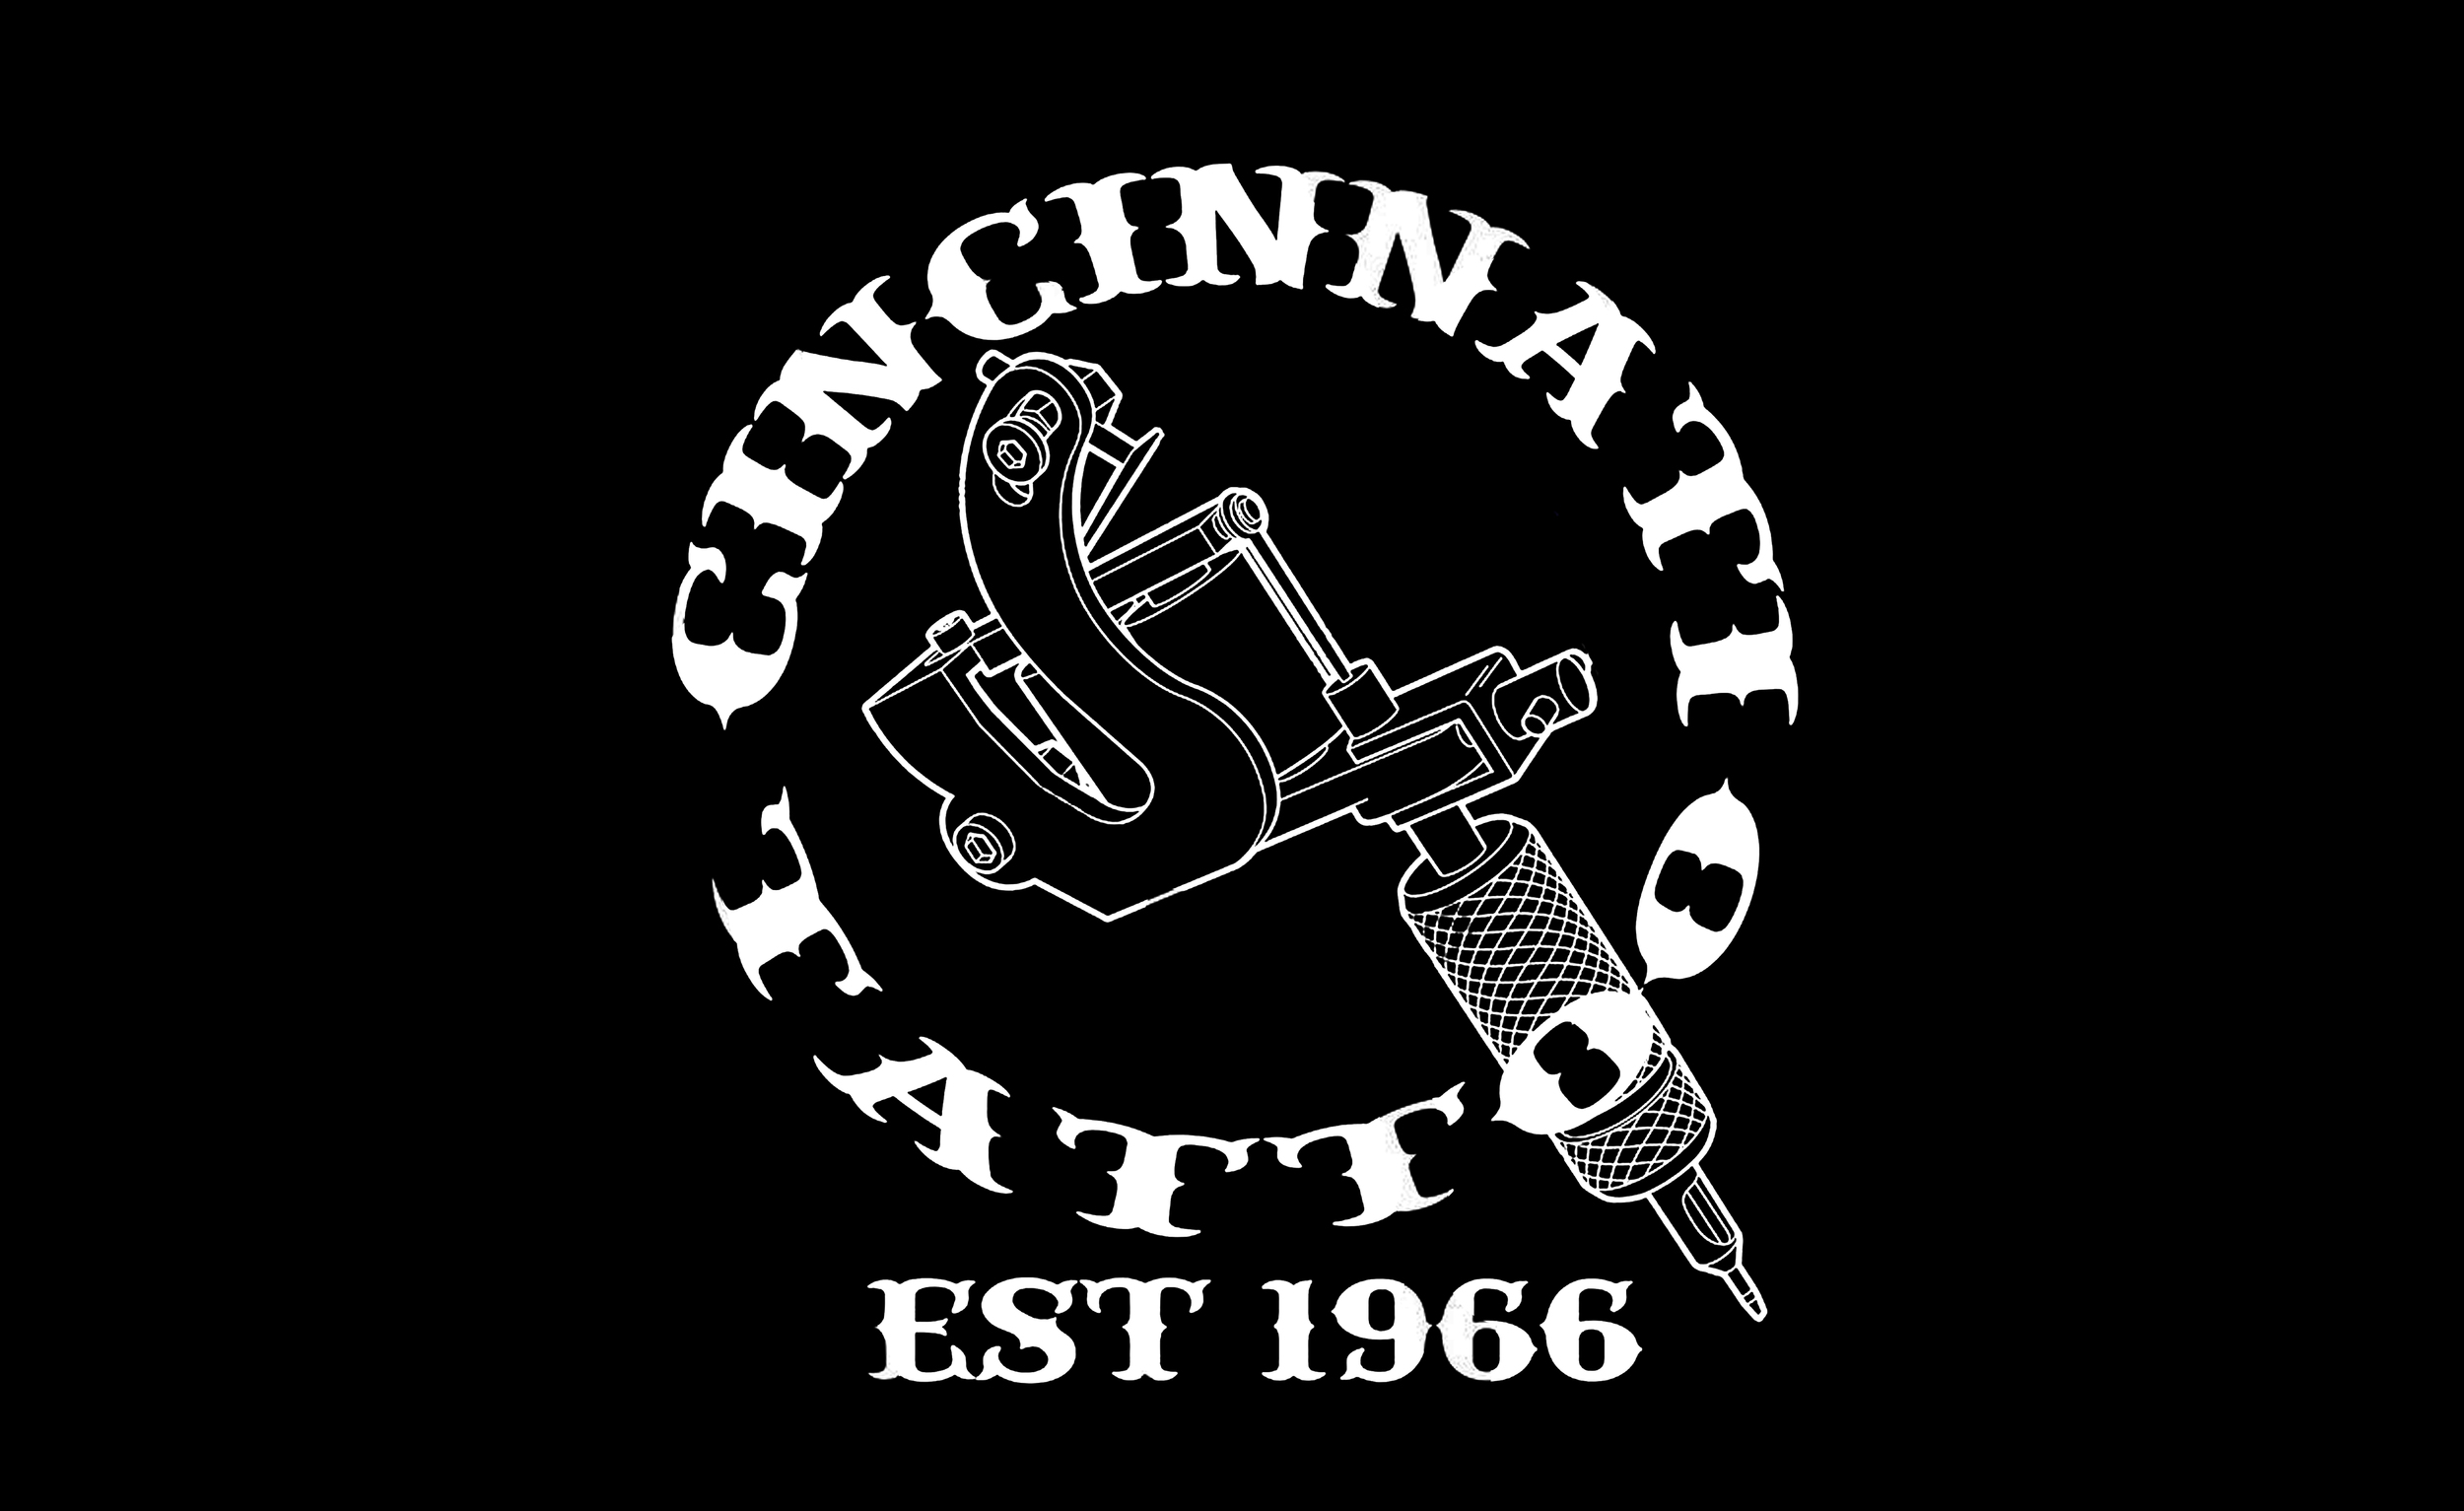 Cincinnati Tattoo & Piercing Co.